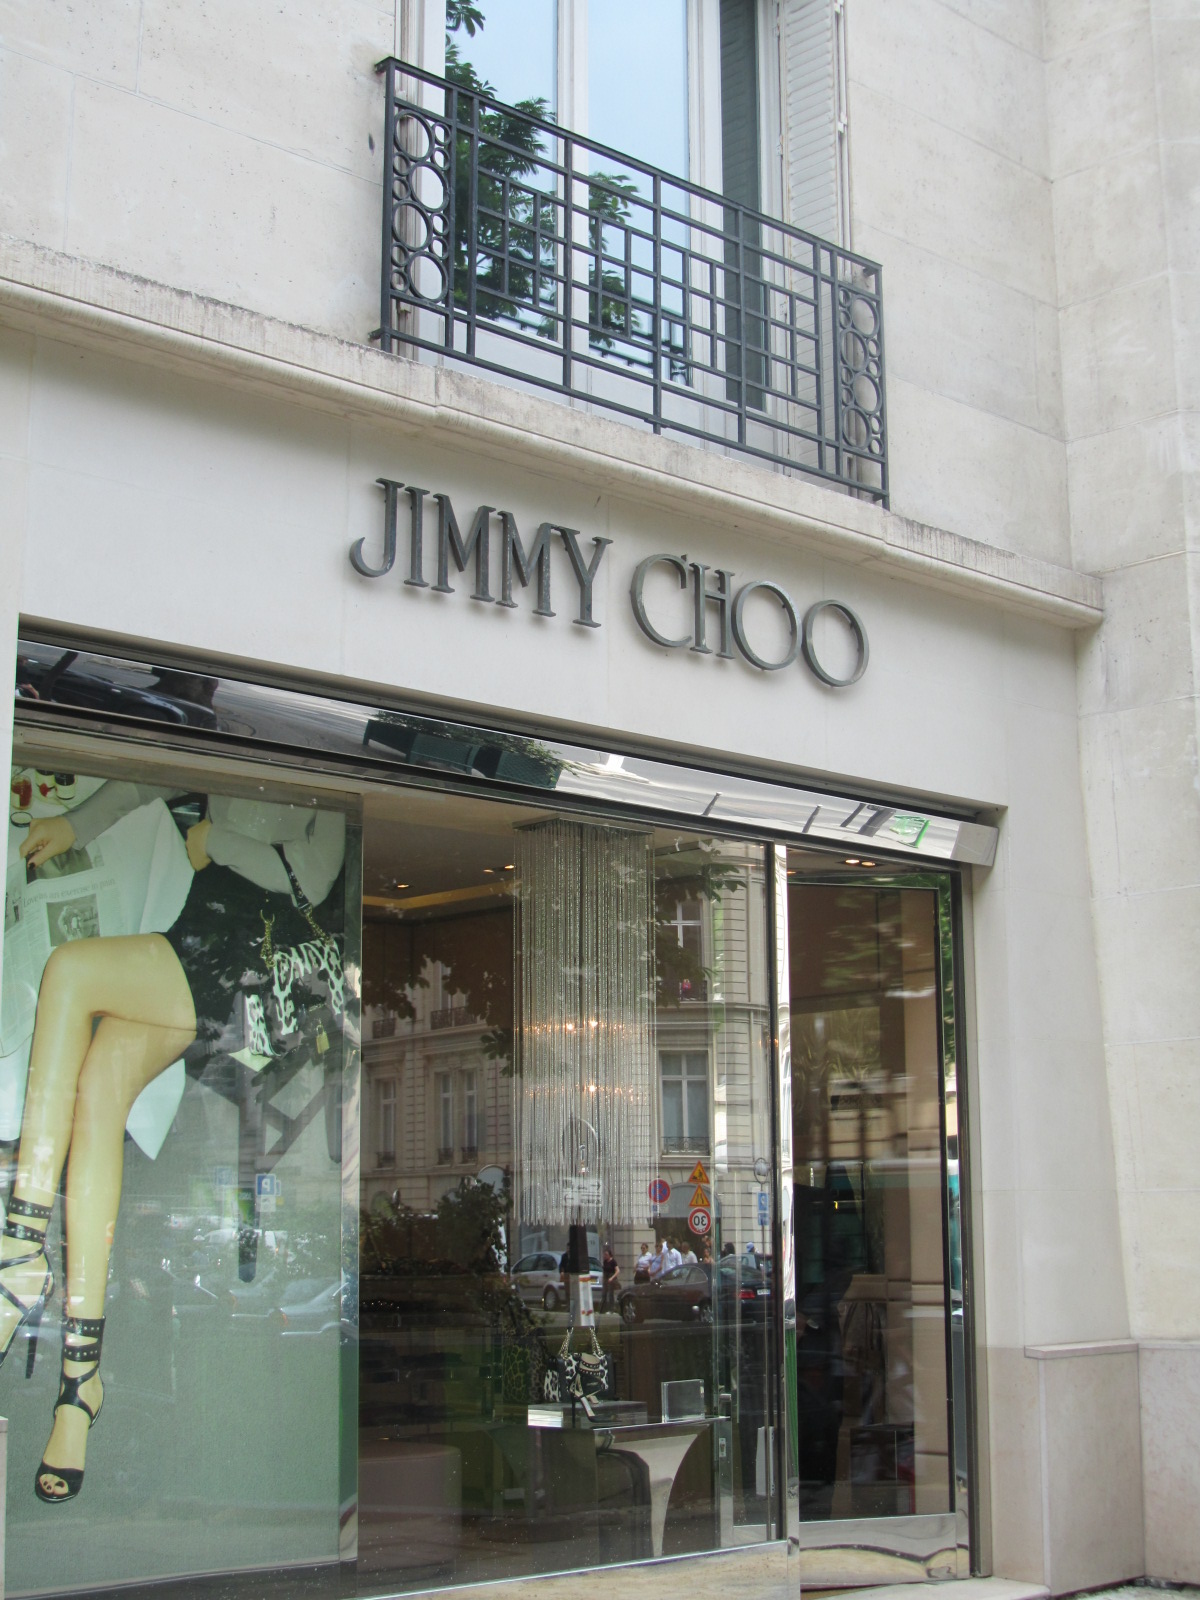 https://blogger.googleusercontent.com/img/b/R29vZ2xl/AVvXsEgsoDvtqG7_Ys8DJr5ln7NOn1UuoGoNLrSRa_F4FUhX6R5cWWjuc4jsUMN6k62jElo12lBkJhB3SjW6JLTz3bqUIR9L3AabwPMGVY24XwV5rMmnyBjwiW91KSwhMysFm0GHBSYUtHEytHo/s1600/Jimmy+Choo+Paris+Designer+shopping.jpg